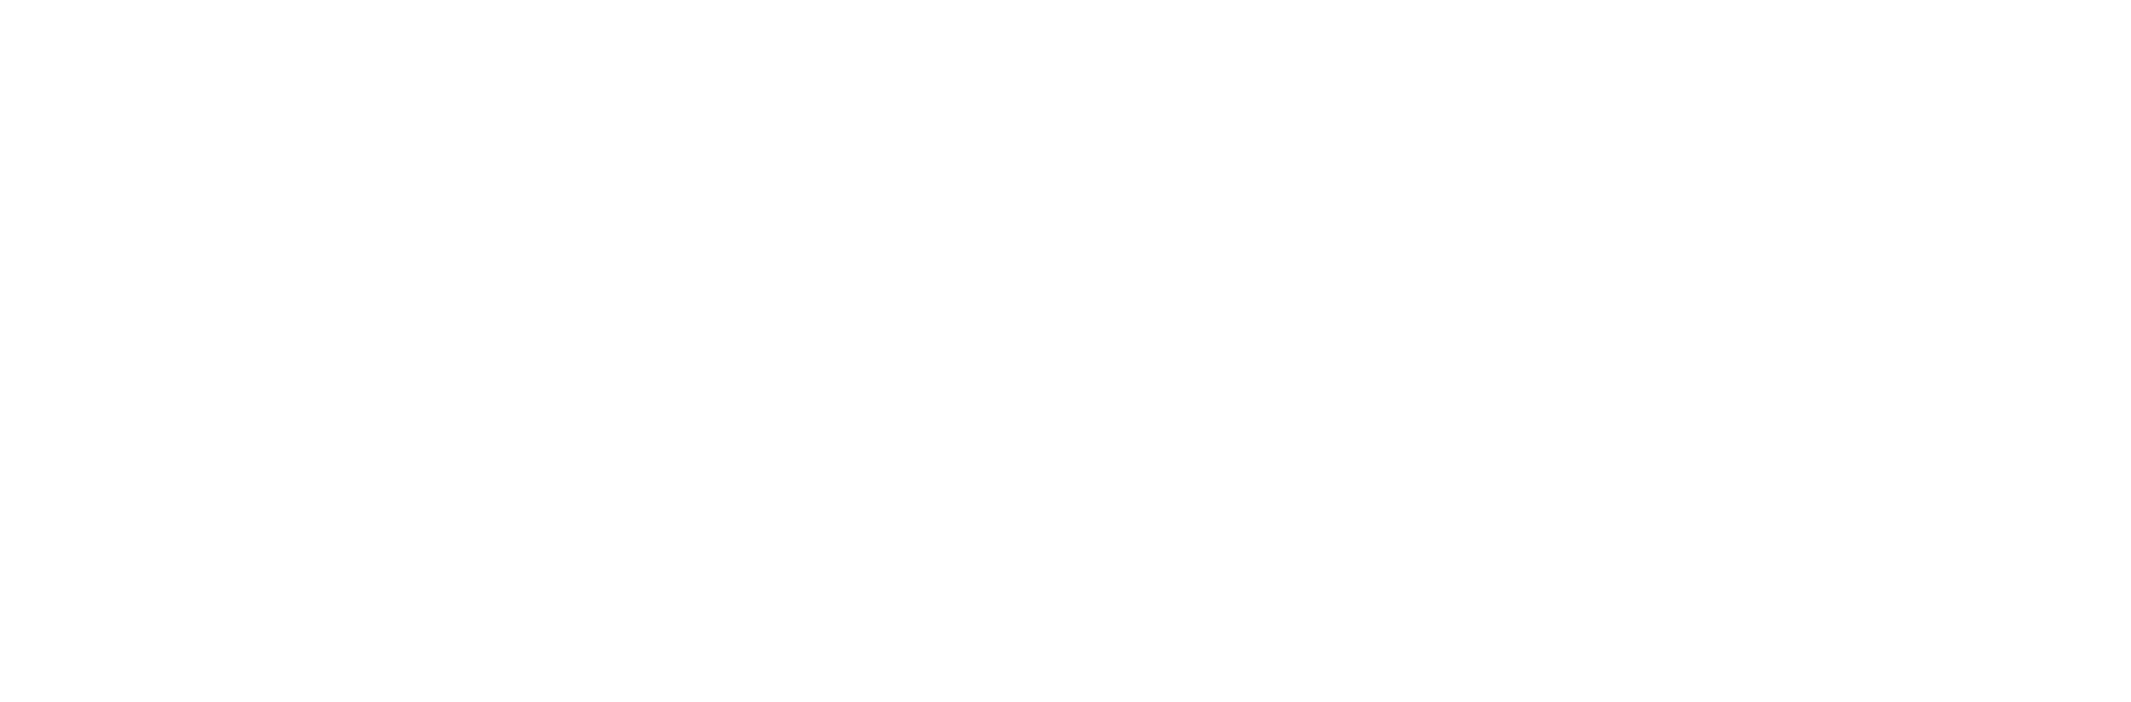 Bender Communications